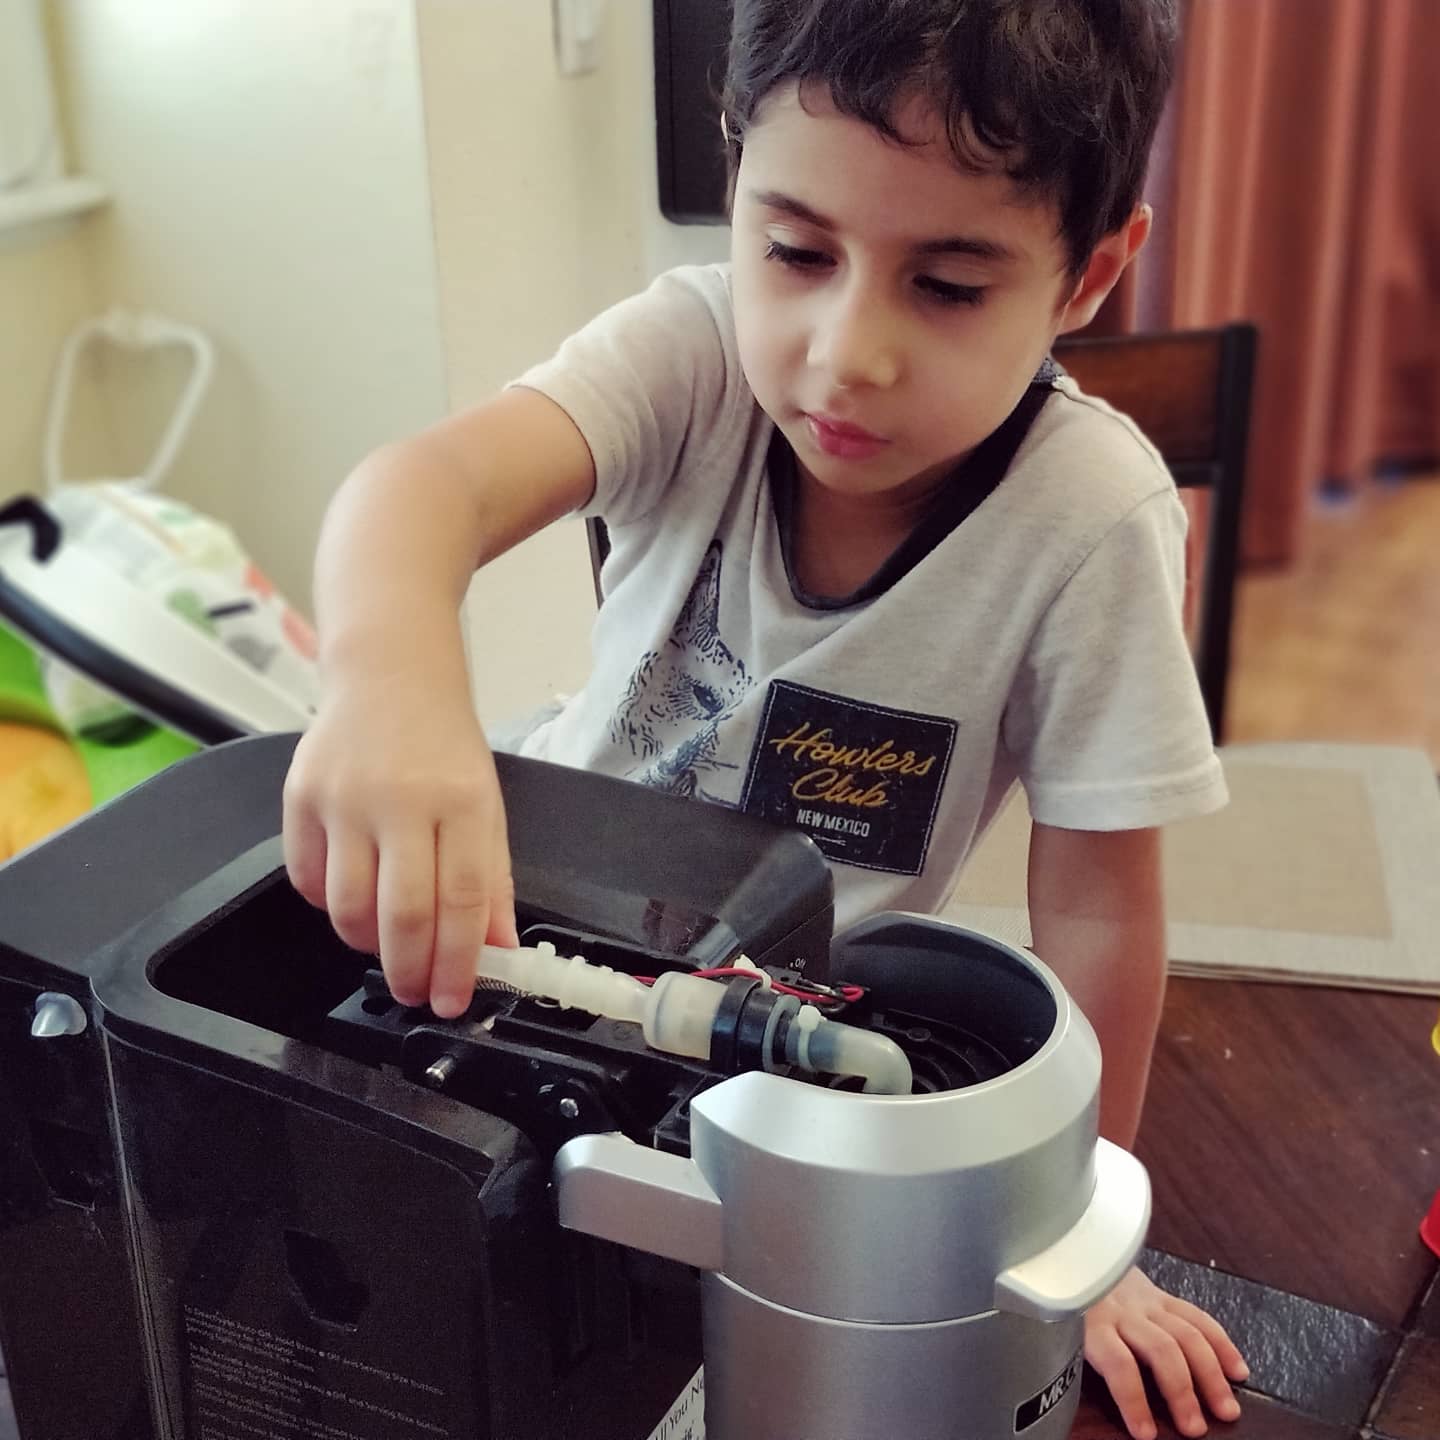 Eren helping me fix the coffee machine